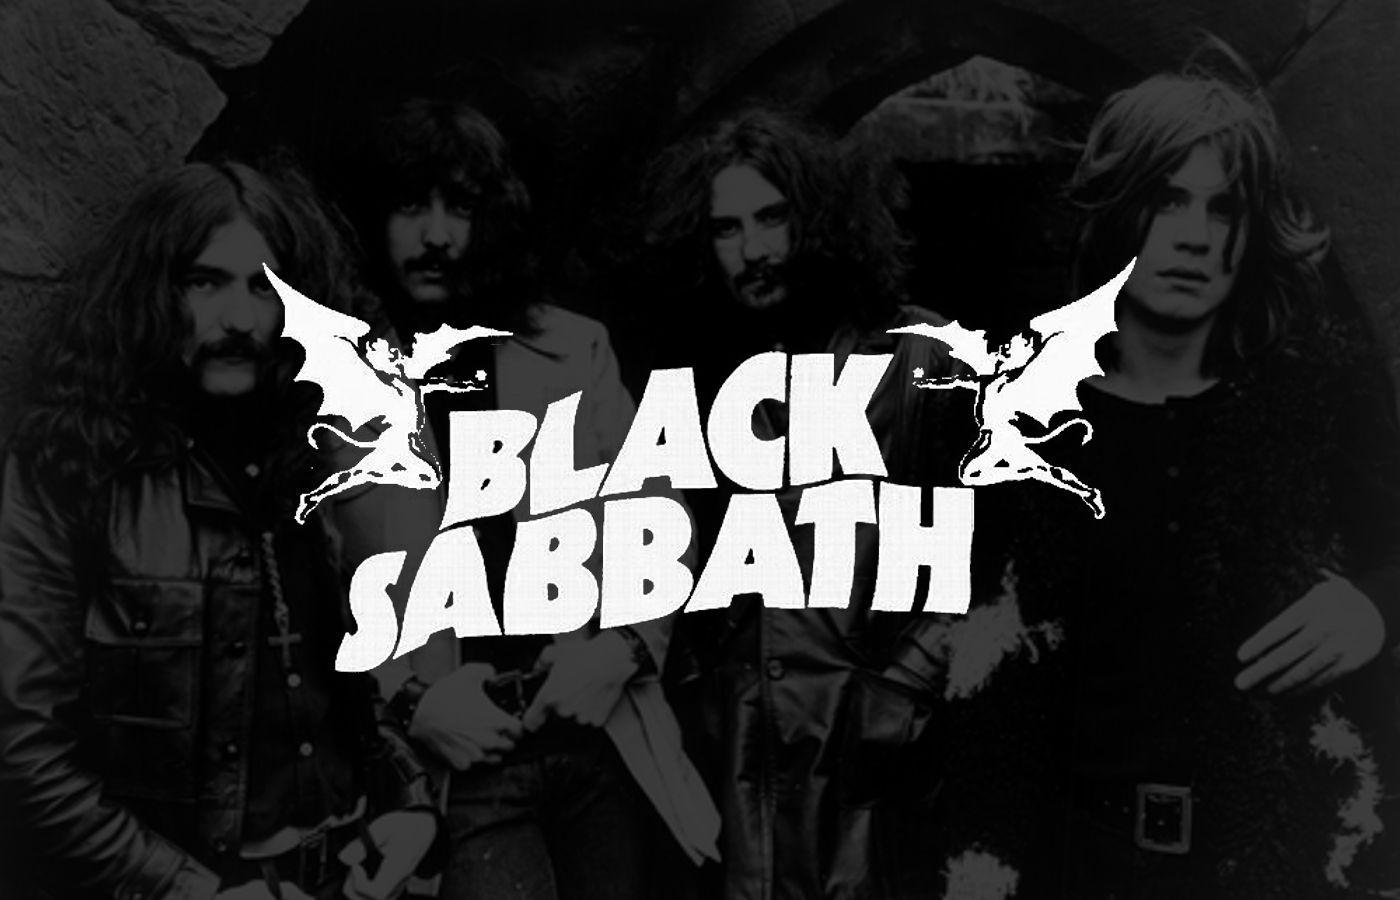 Wallpaper de Iron Maiden, Black Sabbath y GnR! (Megapost)!